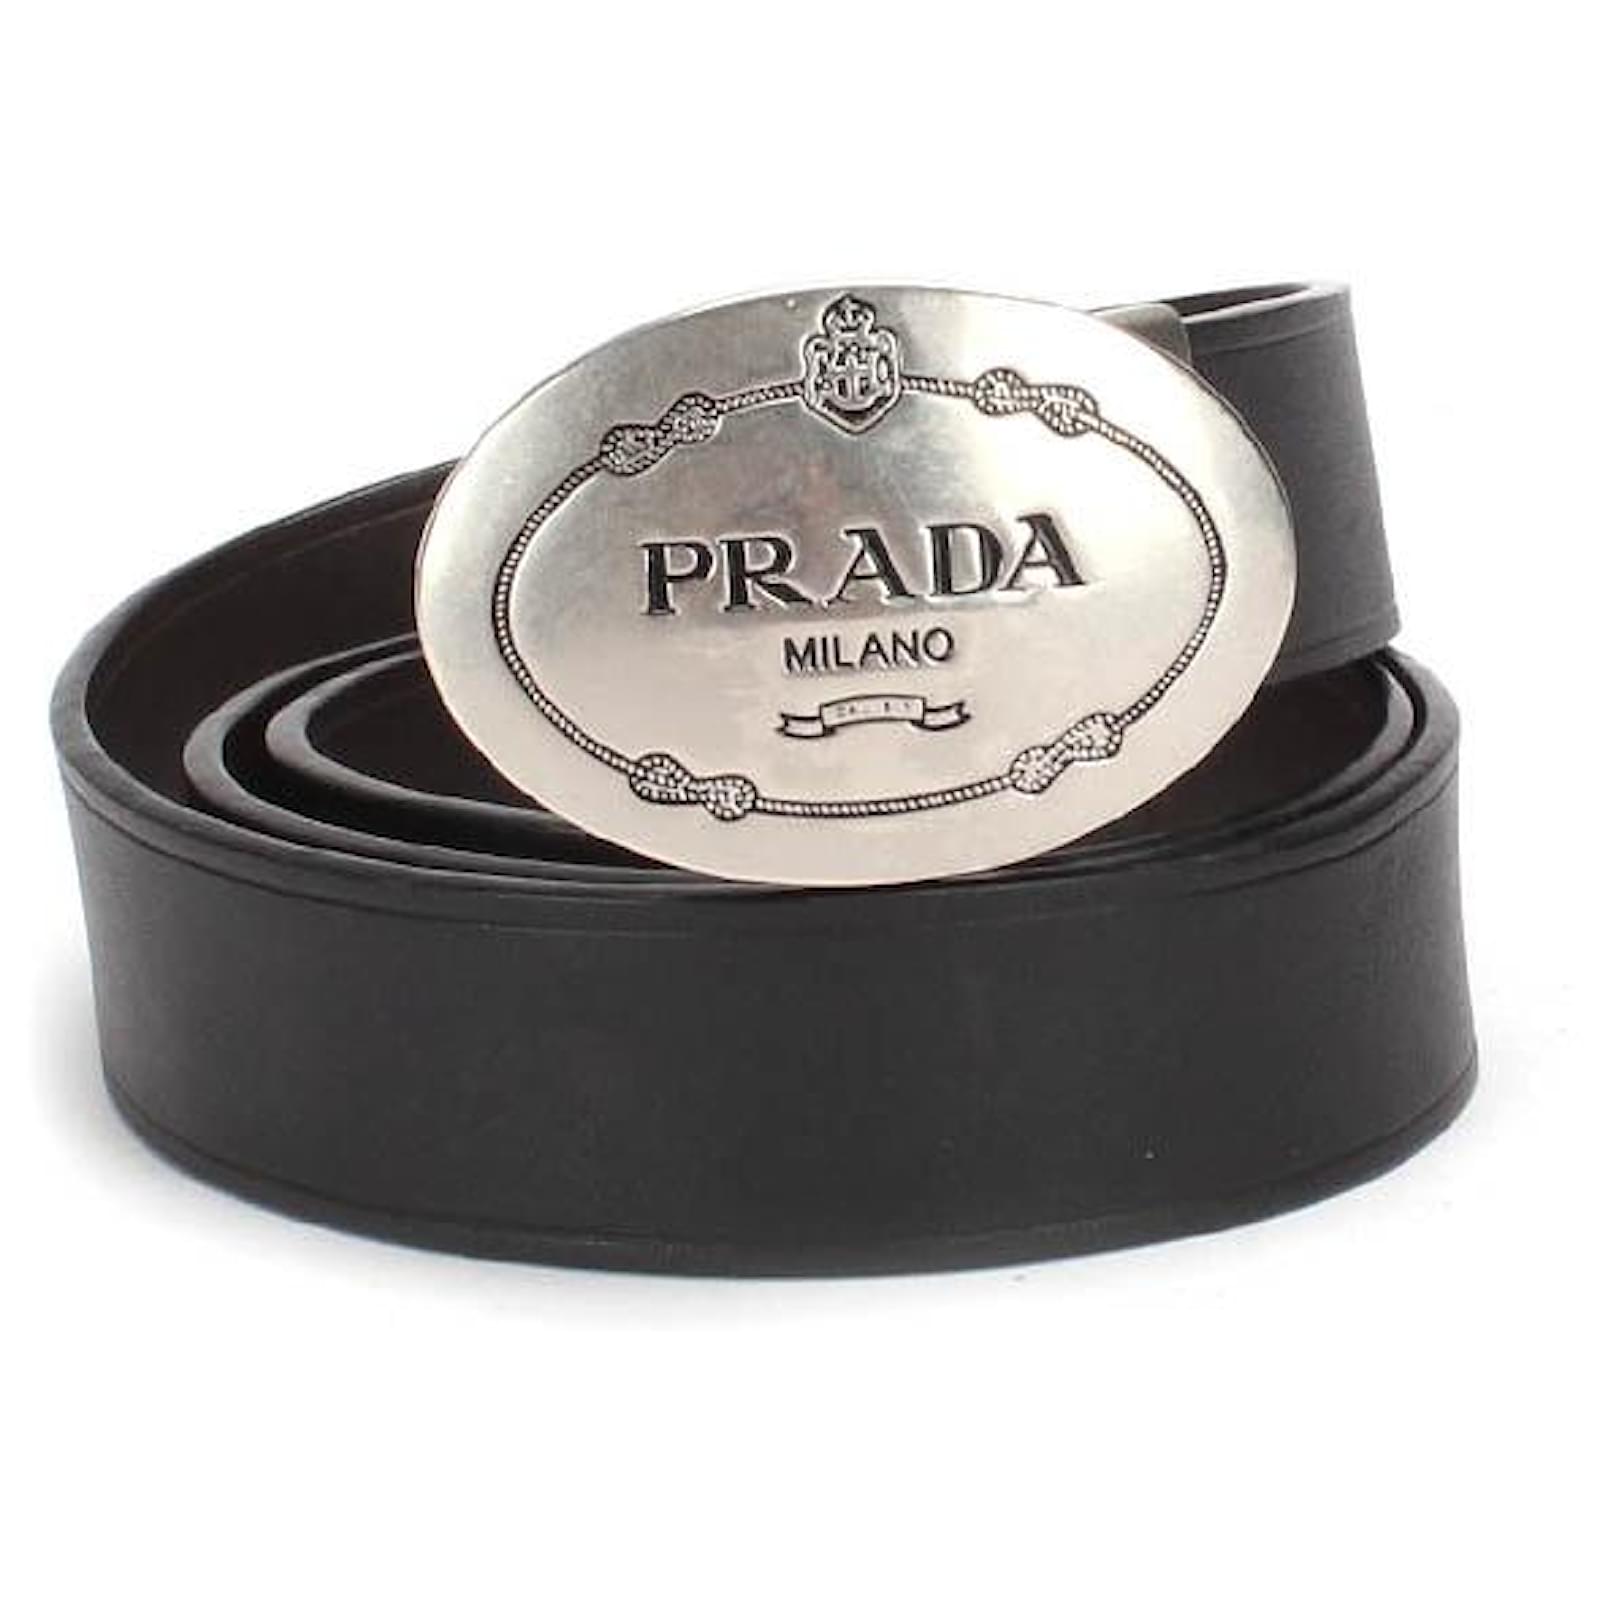 Prada Black Leather Belt With Logo TheDoubleF, 54% OFF